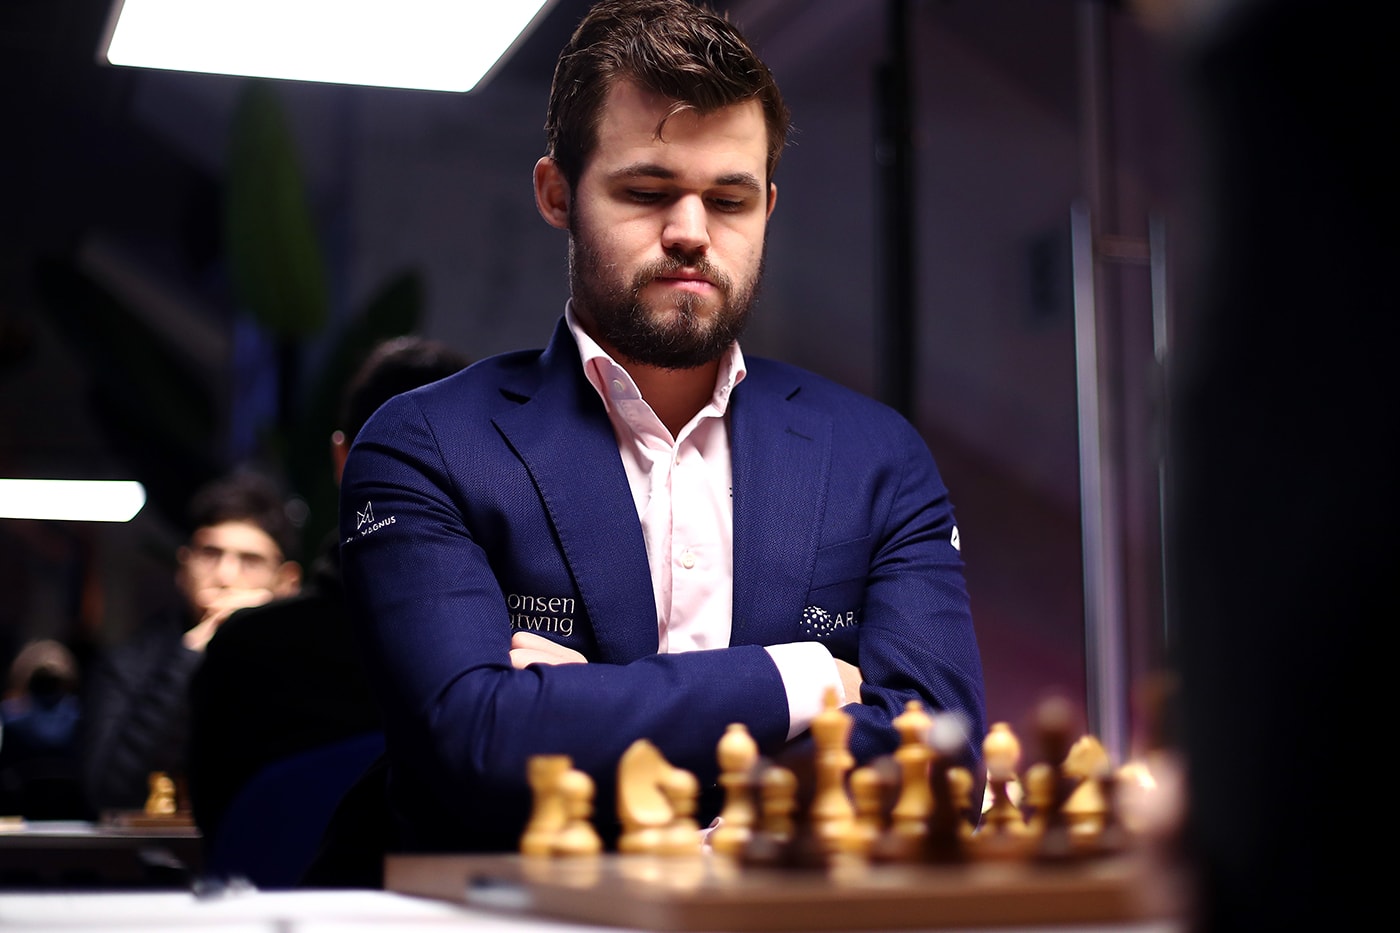 The shortest game of Magnus Carlsen's chess career! 